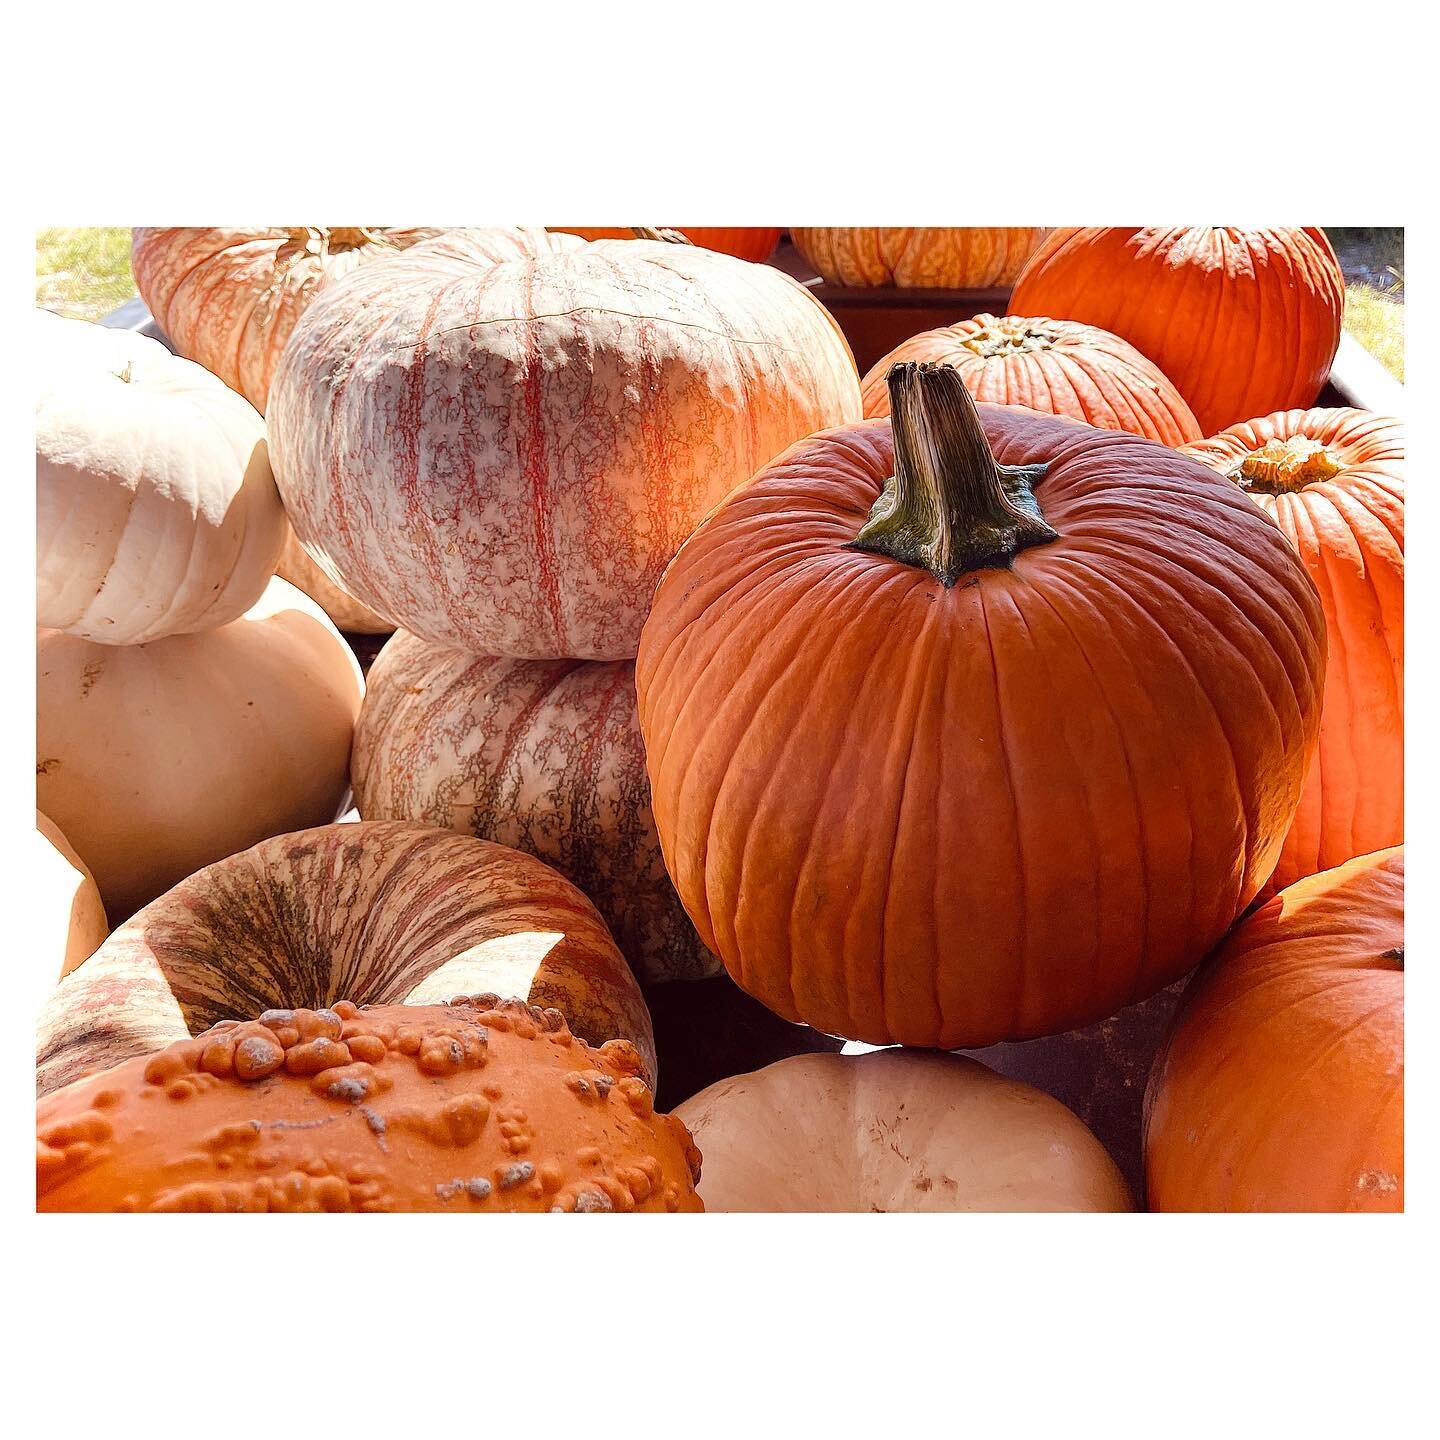 I ❤️ Octobers. #pumpkin #spookyseason #october #fall